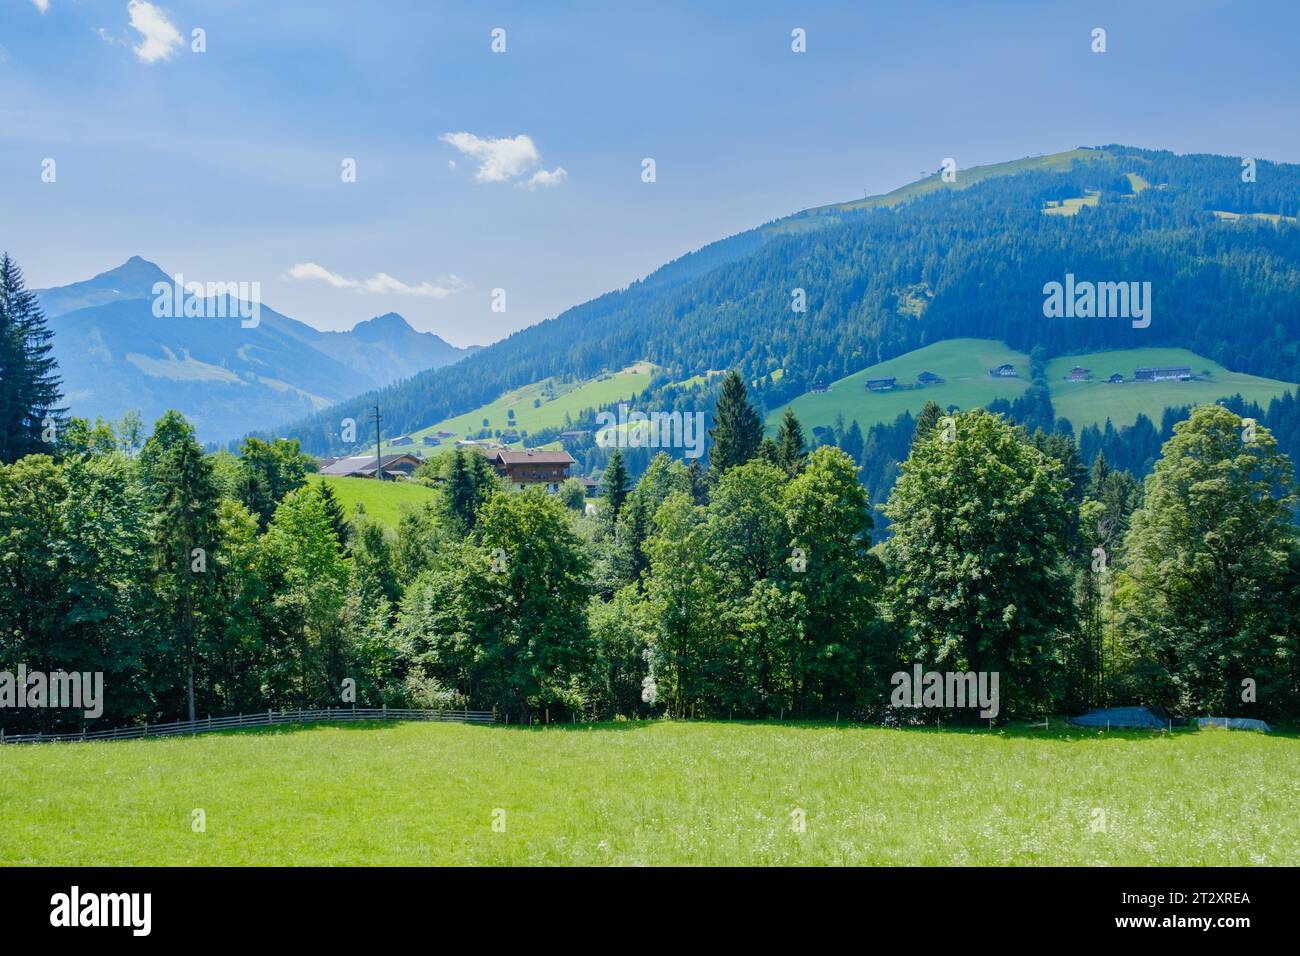 Una linea di alberi, lussureggianti campi verdi costellati di case, colline ondulate e montagne. Alpbach, Tirolo, Austria. Foto Stock